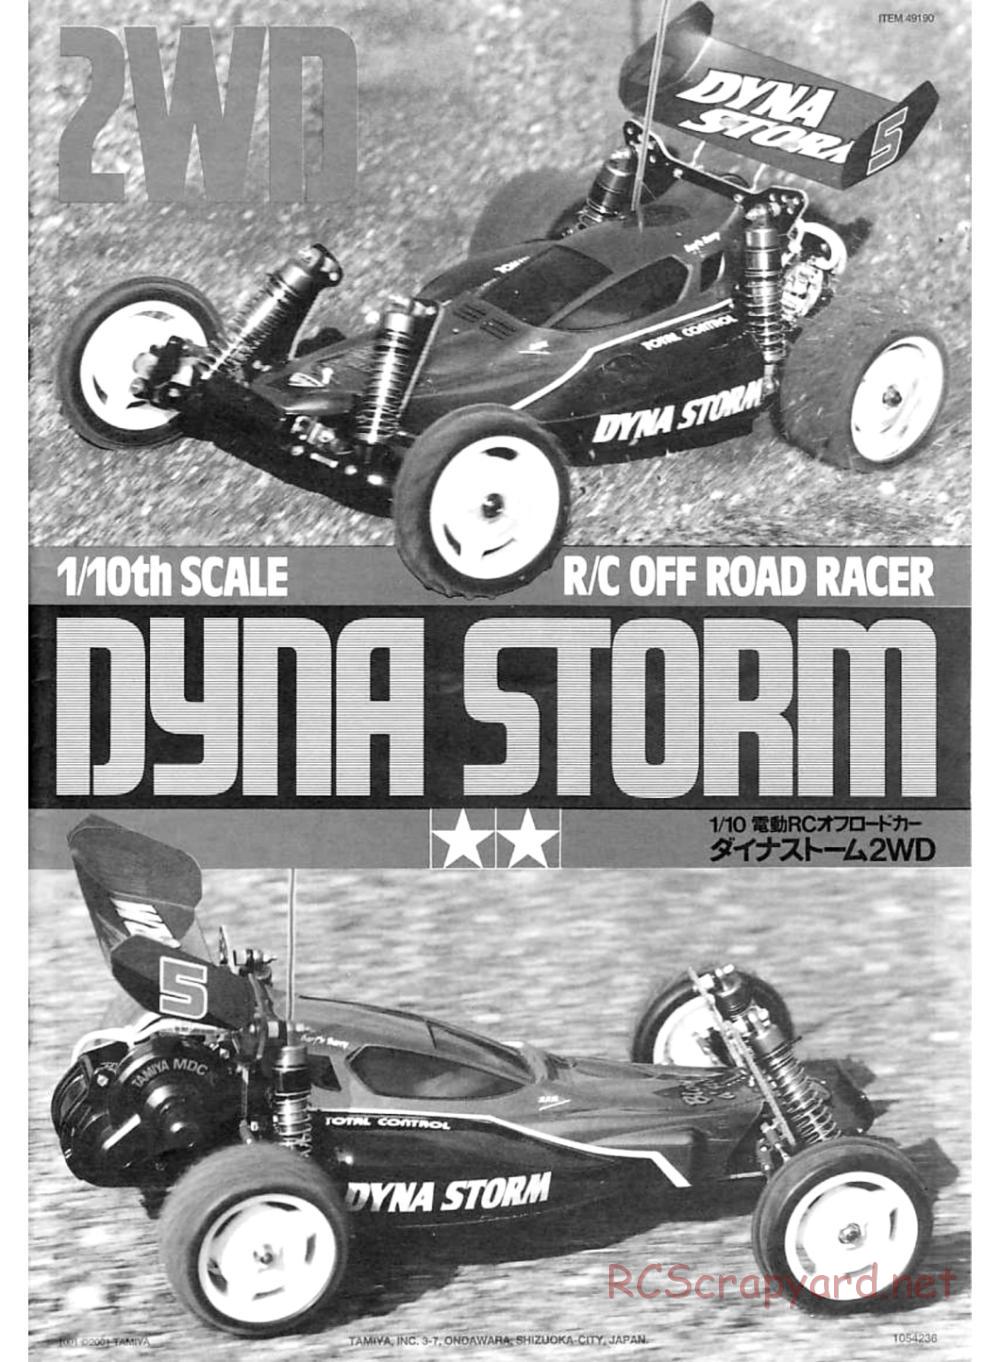 Tamiya - Dyna Storm Chassis - Manual - Page 1